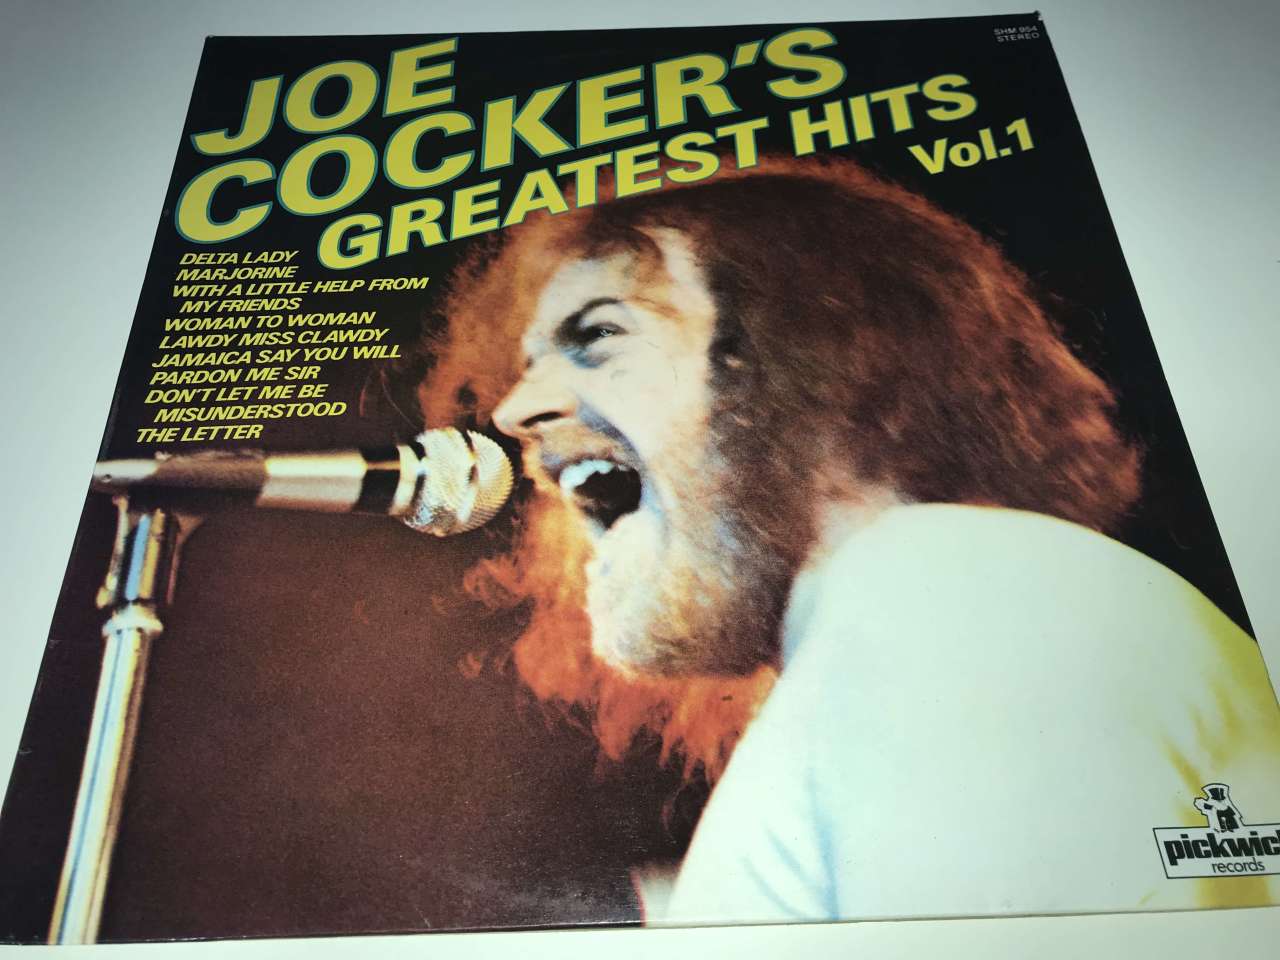 Joe Cocker ‎– Joe Cocker's Greatest Hits Vol. 1